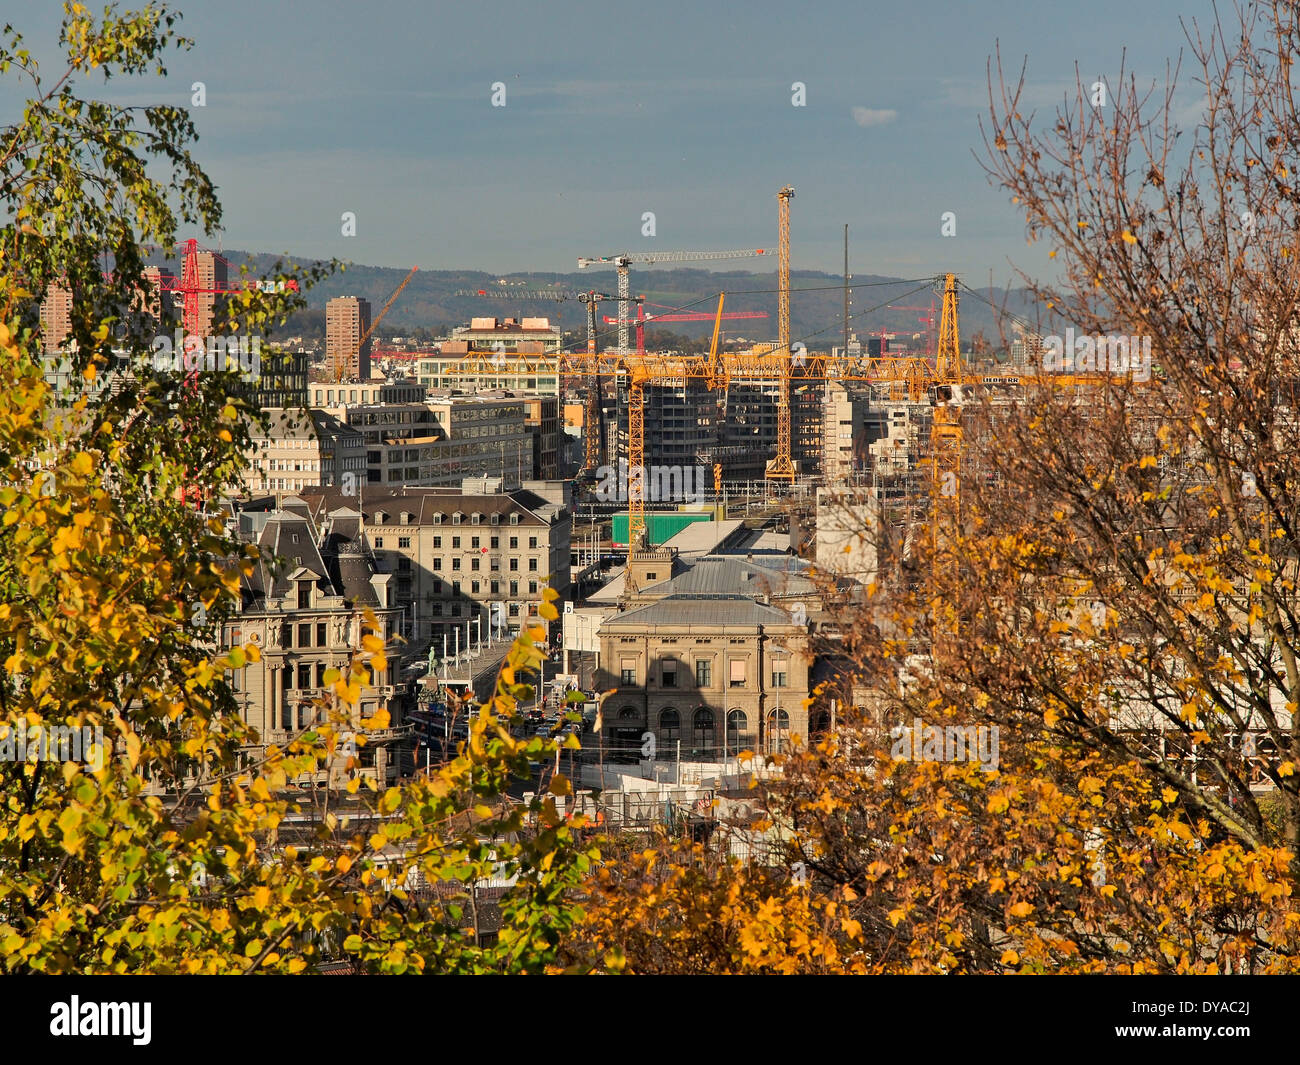 Zurich, Oerlikon, Switzerland, Europe, construction work, construction cranes, trees, central station Stock Photo